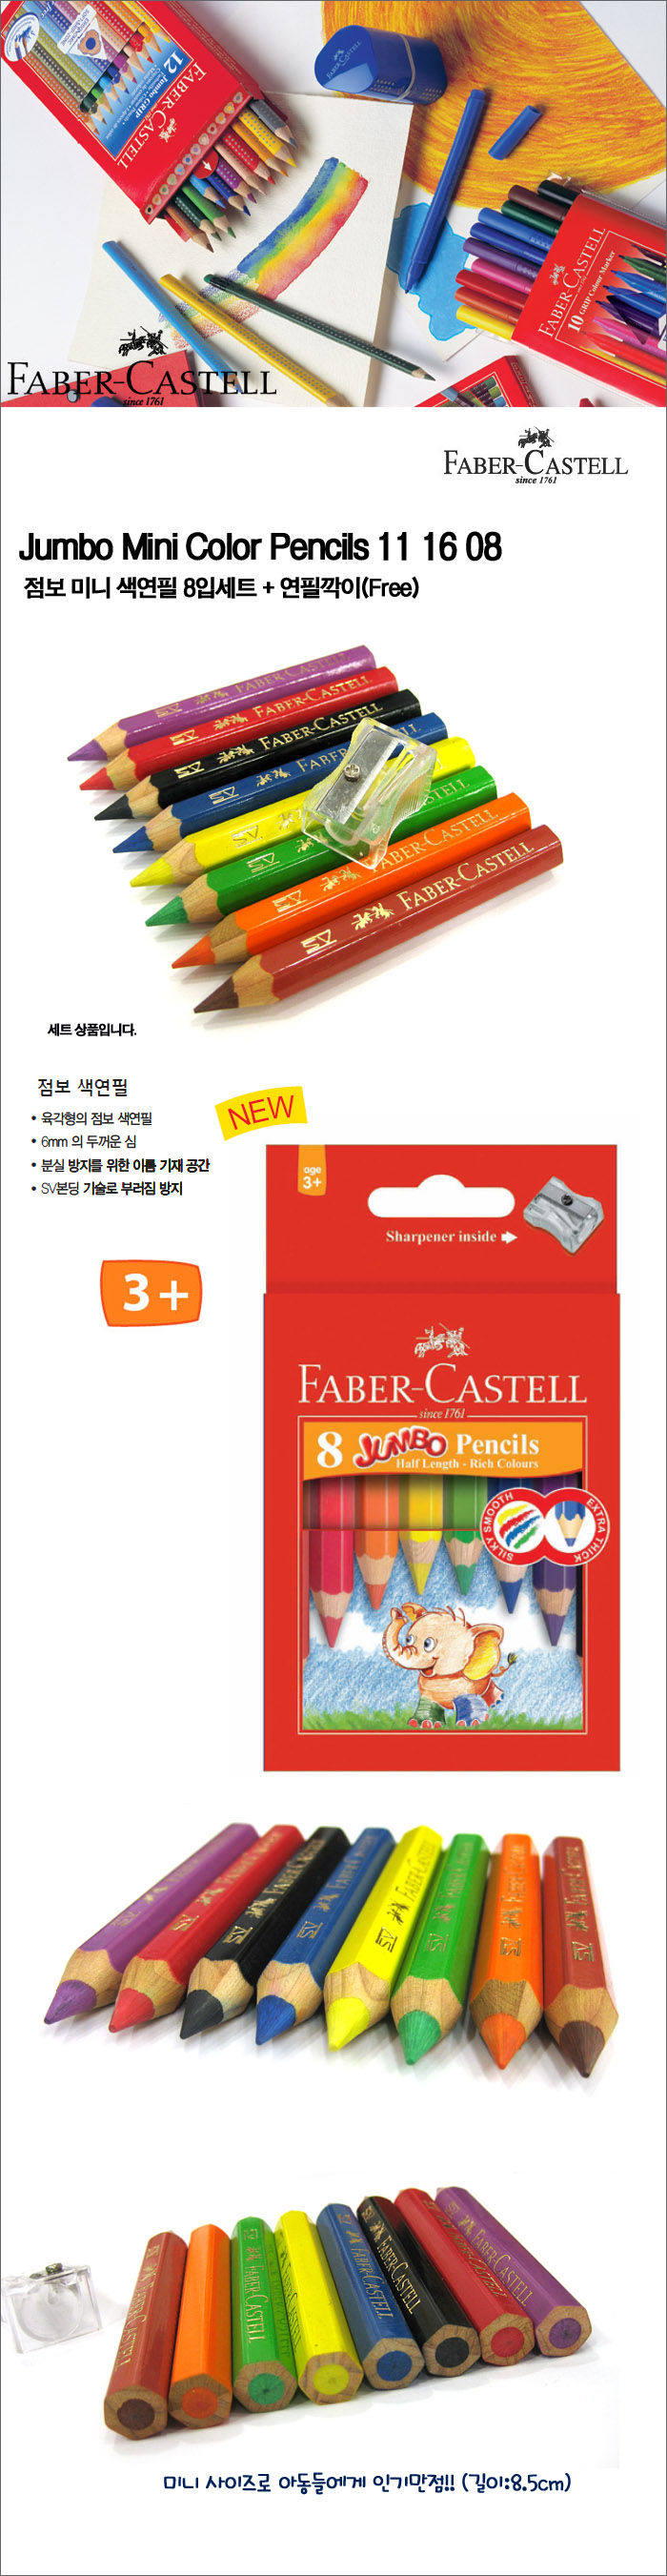 Faber-Castell Jumbo Mini Color Pencils